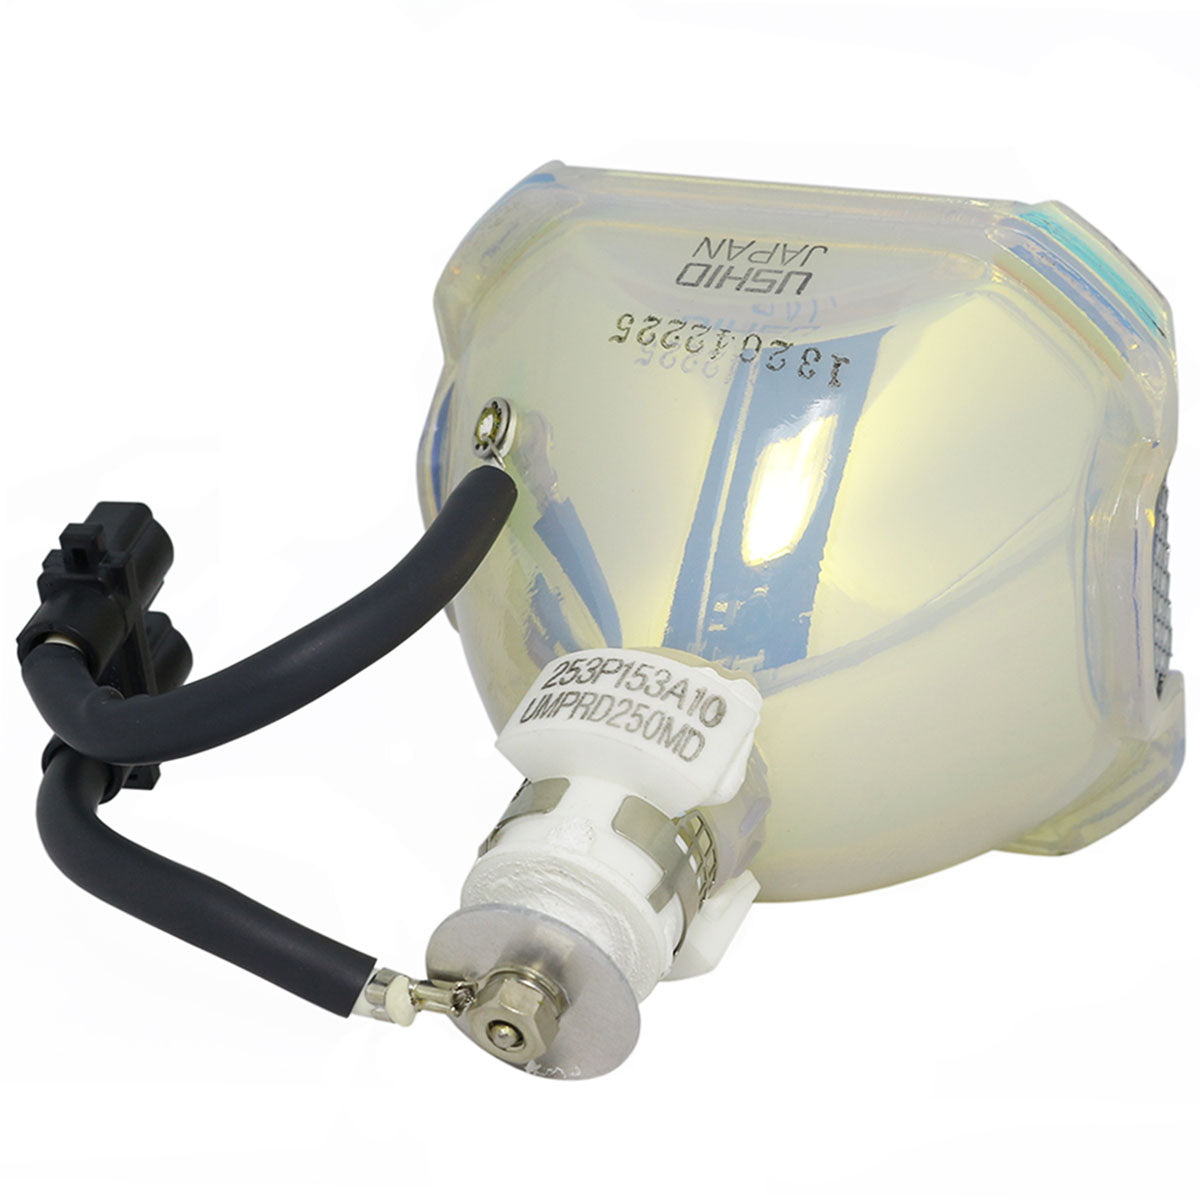 Panasonic ET-SLMP47 Ushio Projector Bare Lamp